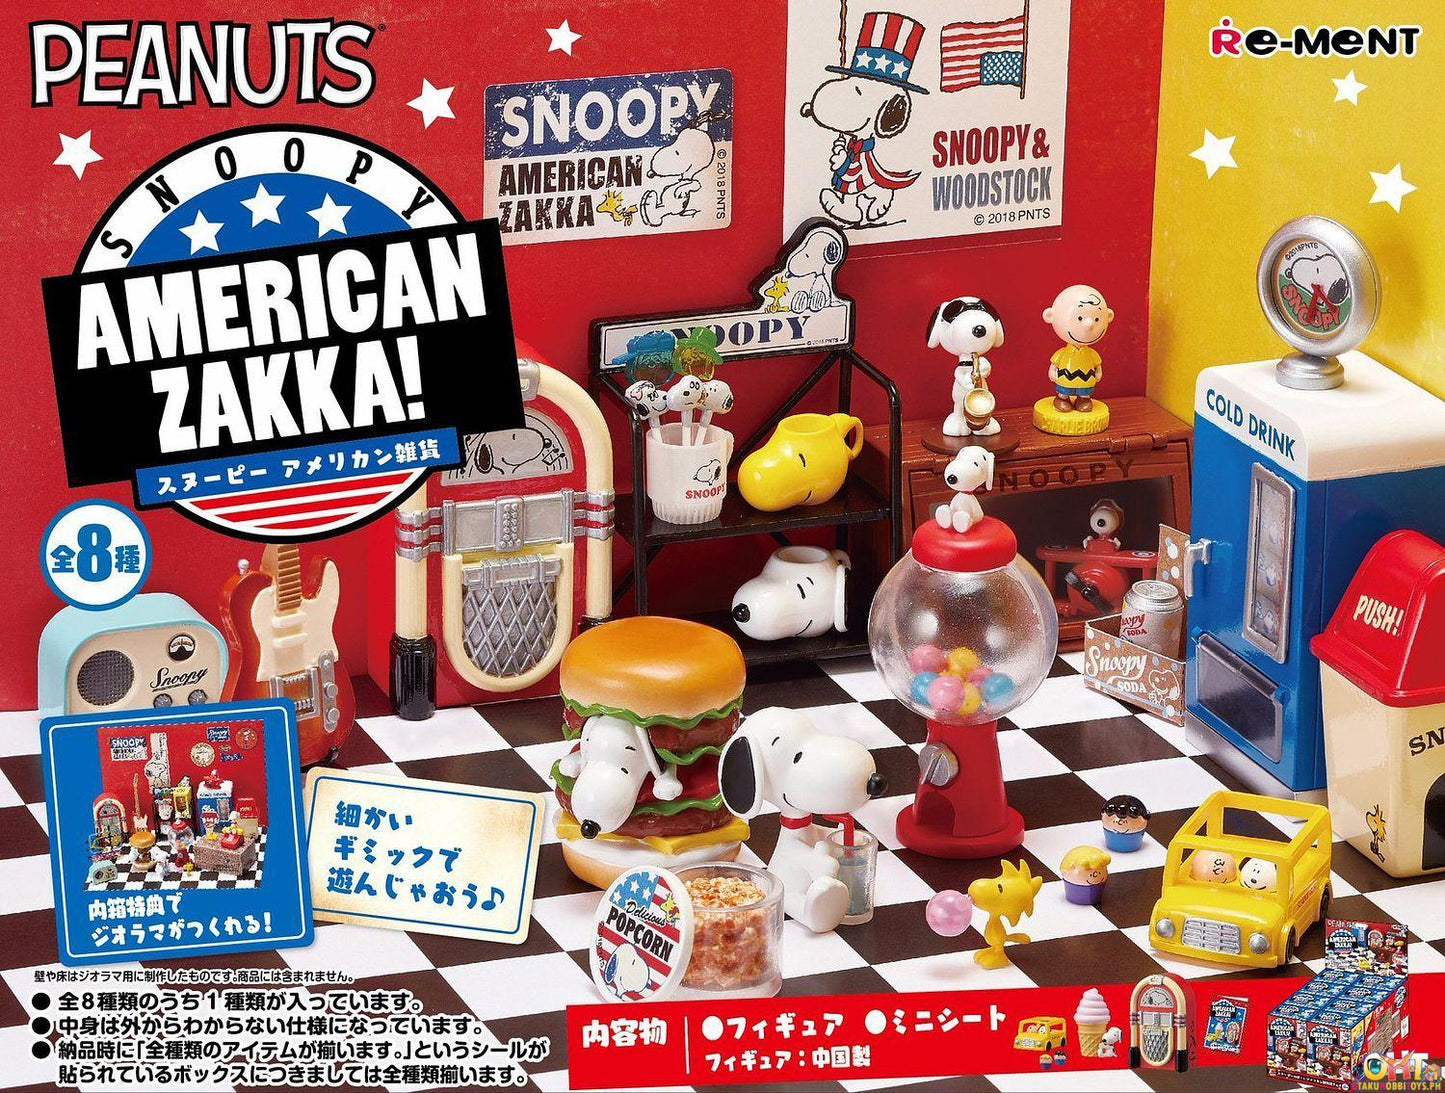 Re-Ment Snoopy American Zakka (Box of 8)